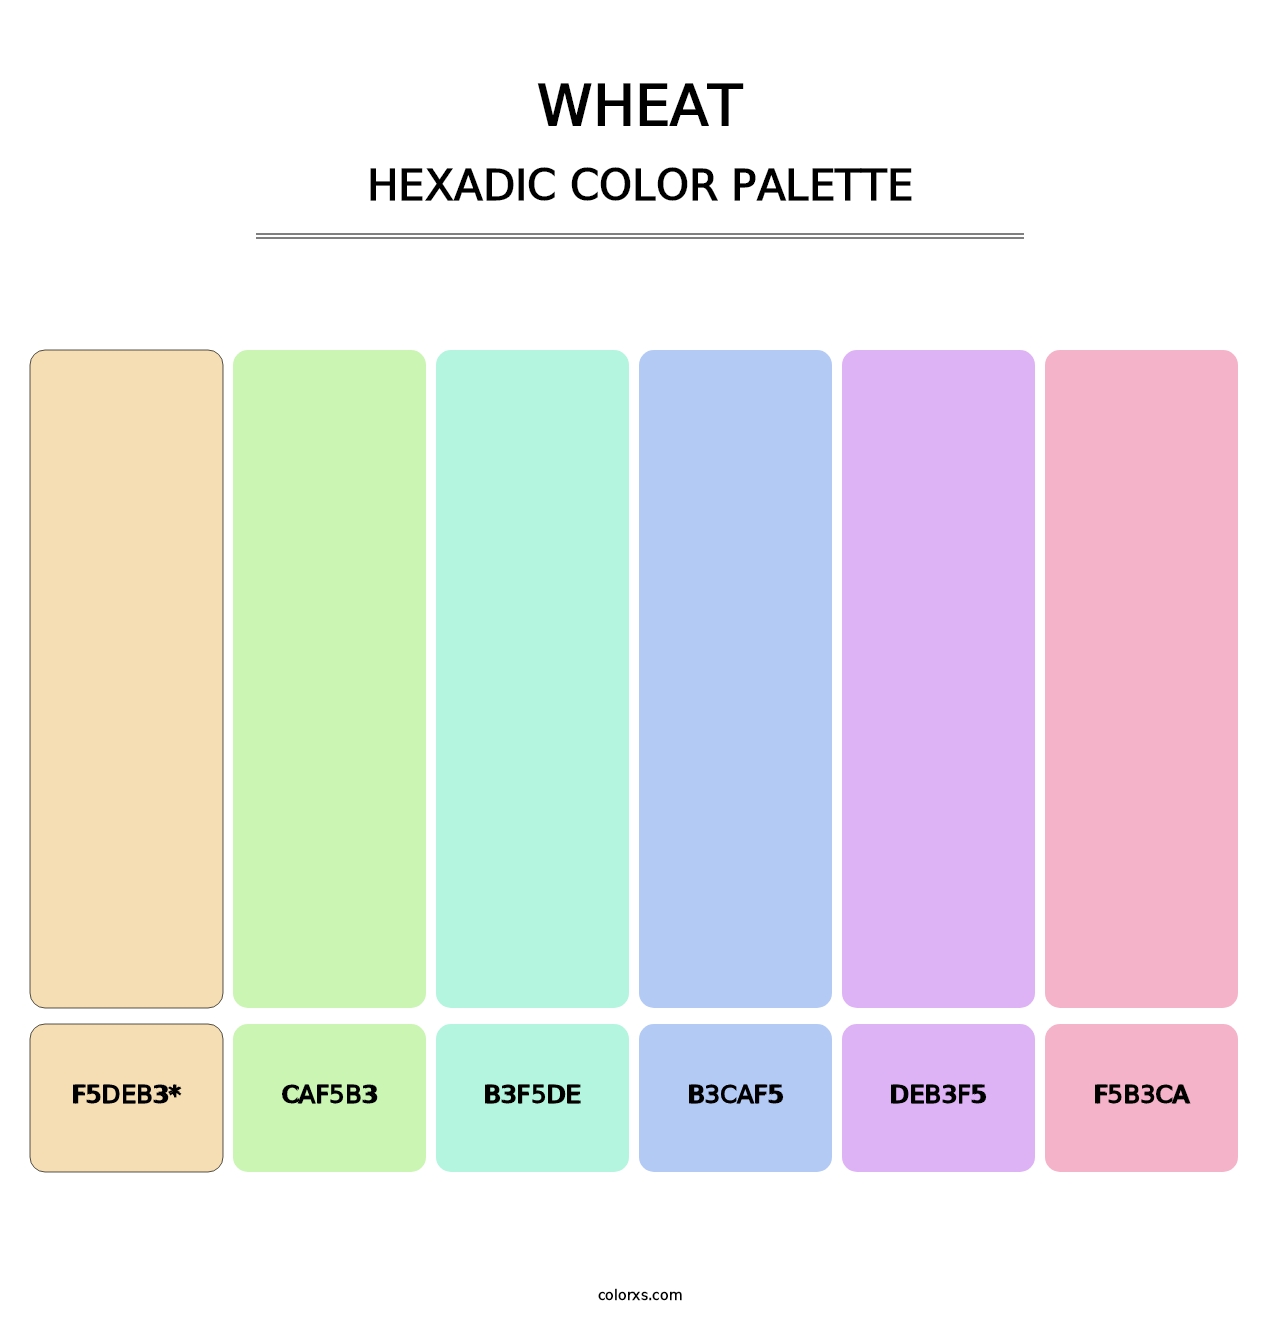 Wheat - Hexadic Color Palette